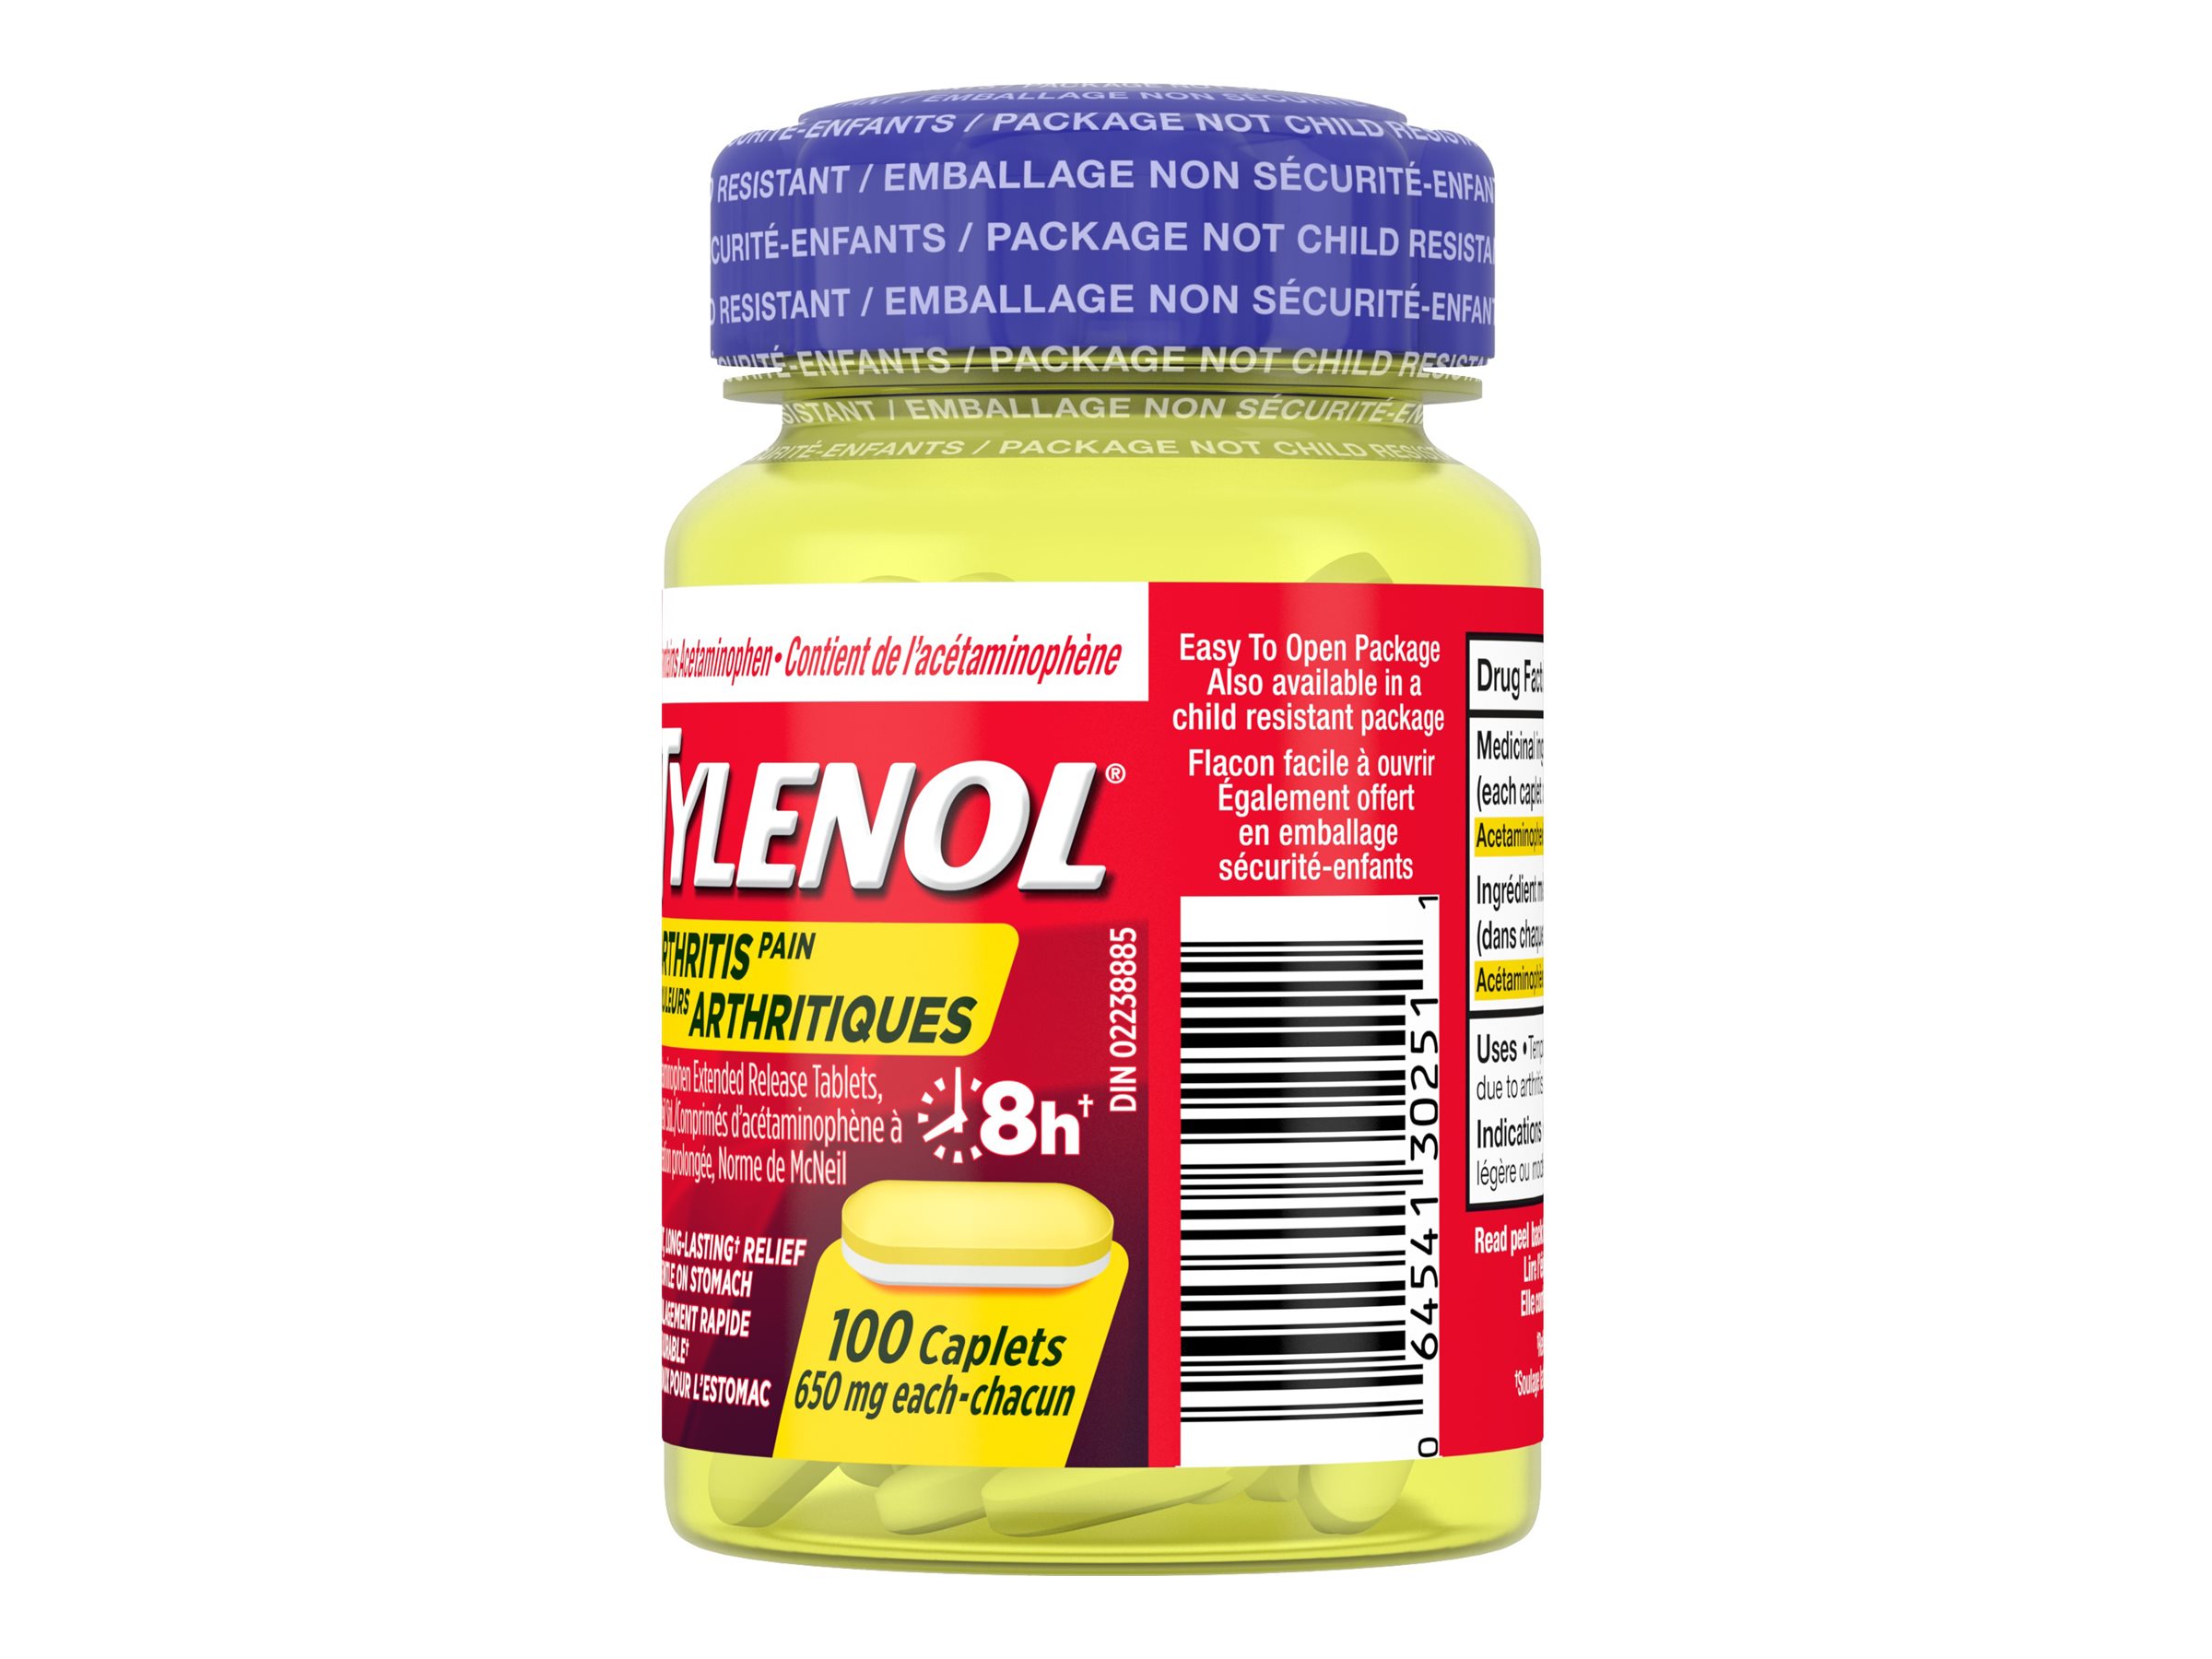 Tylenol* Arthritis Pain Acetaminophen Caplets - 100's� �